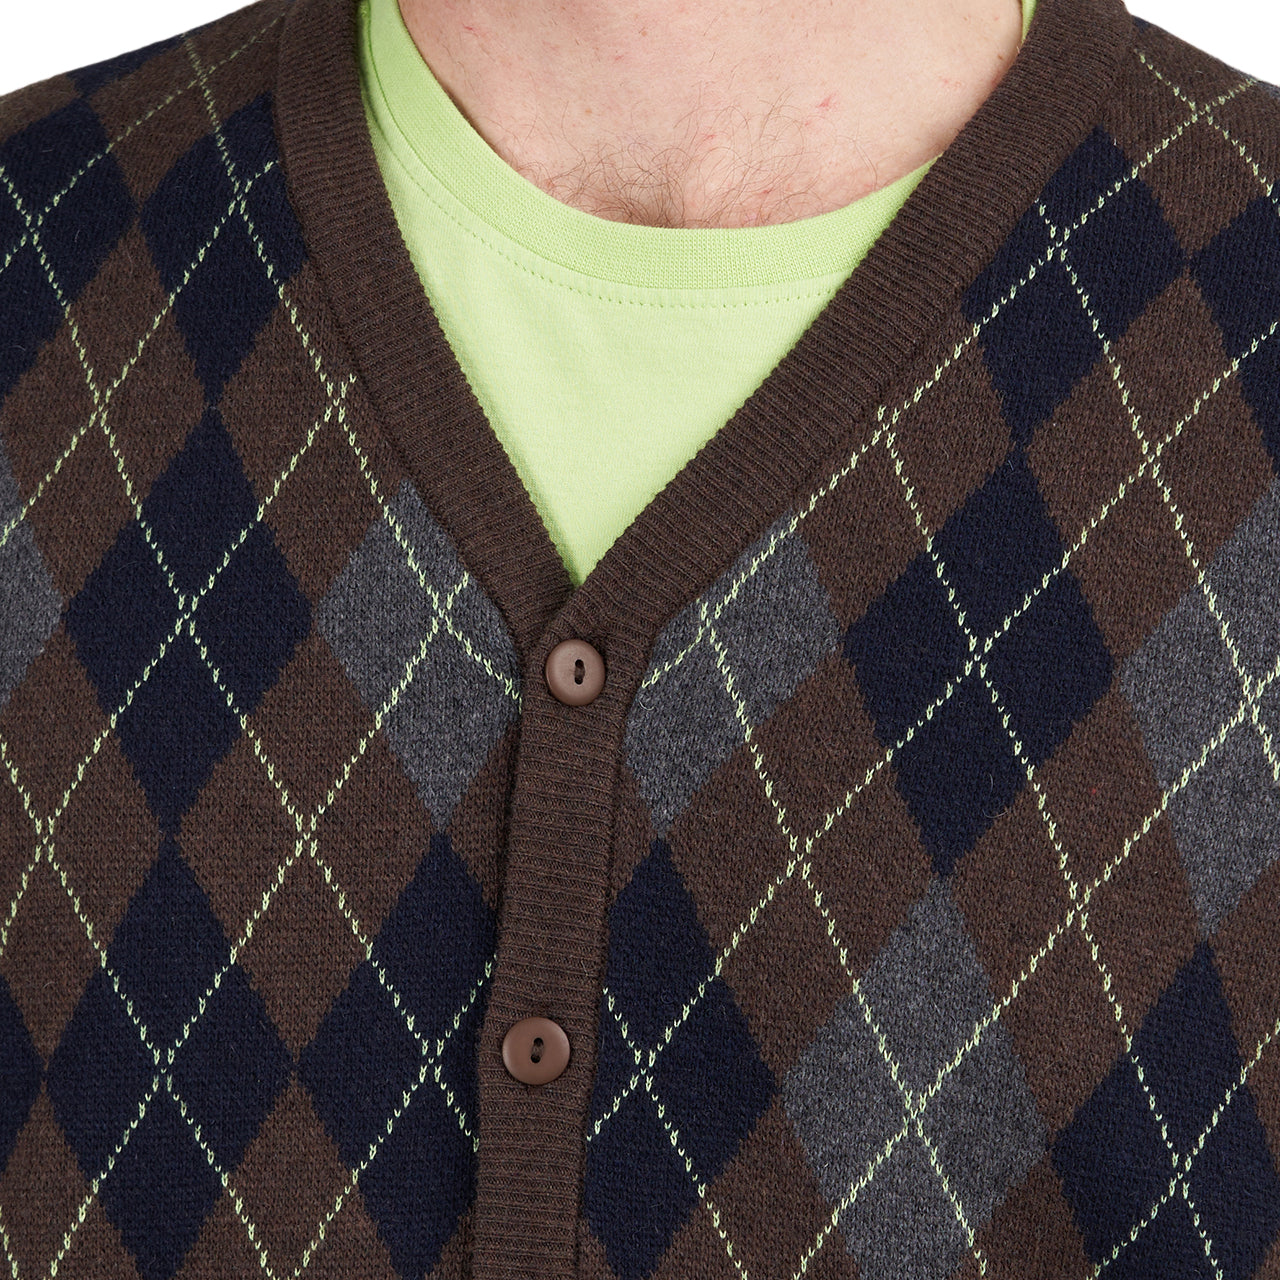 Pop Trading Company Knitted Cardigan Vest (Navy / Braun / Grau)  - Allike Store